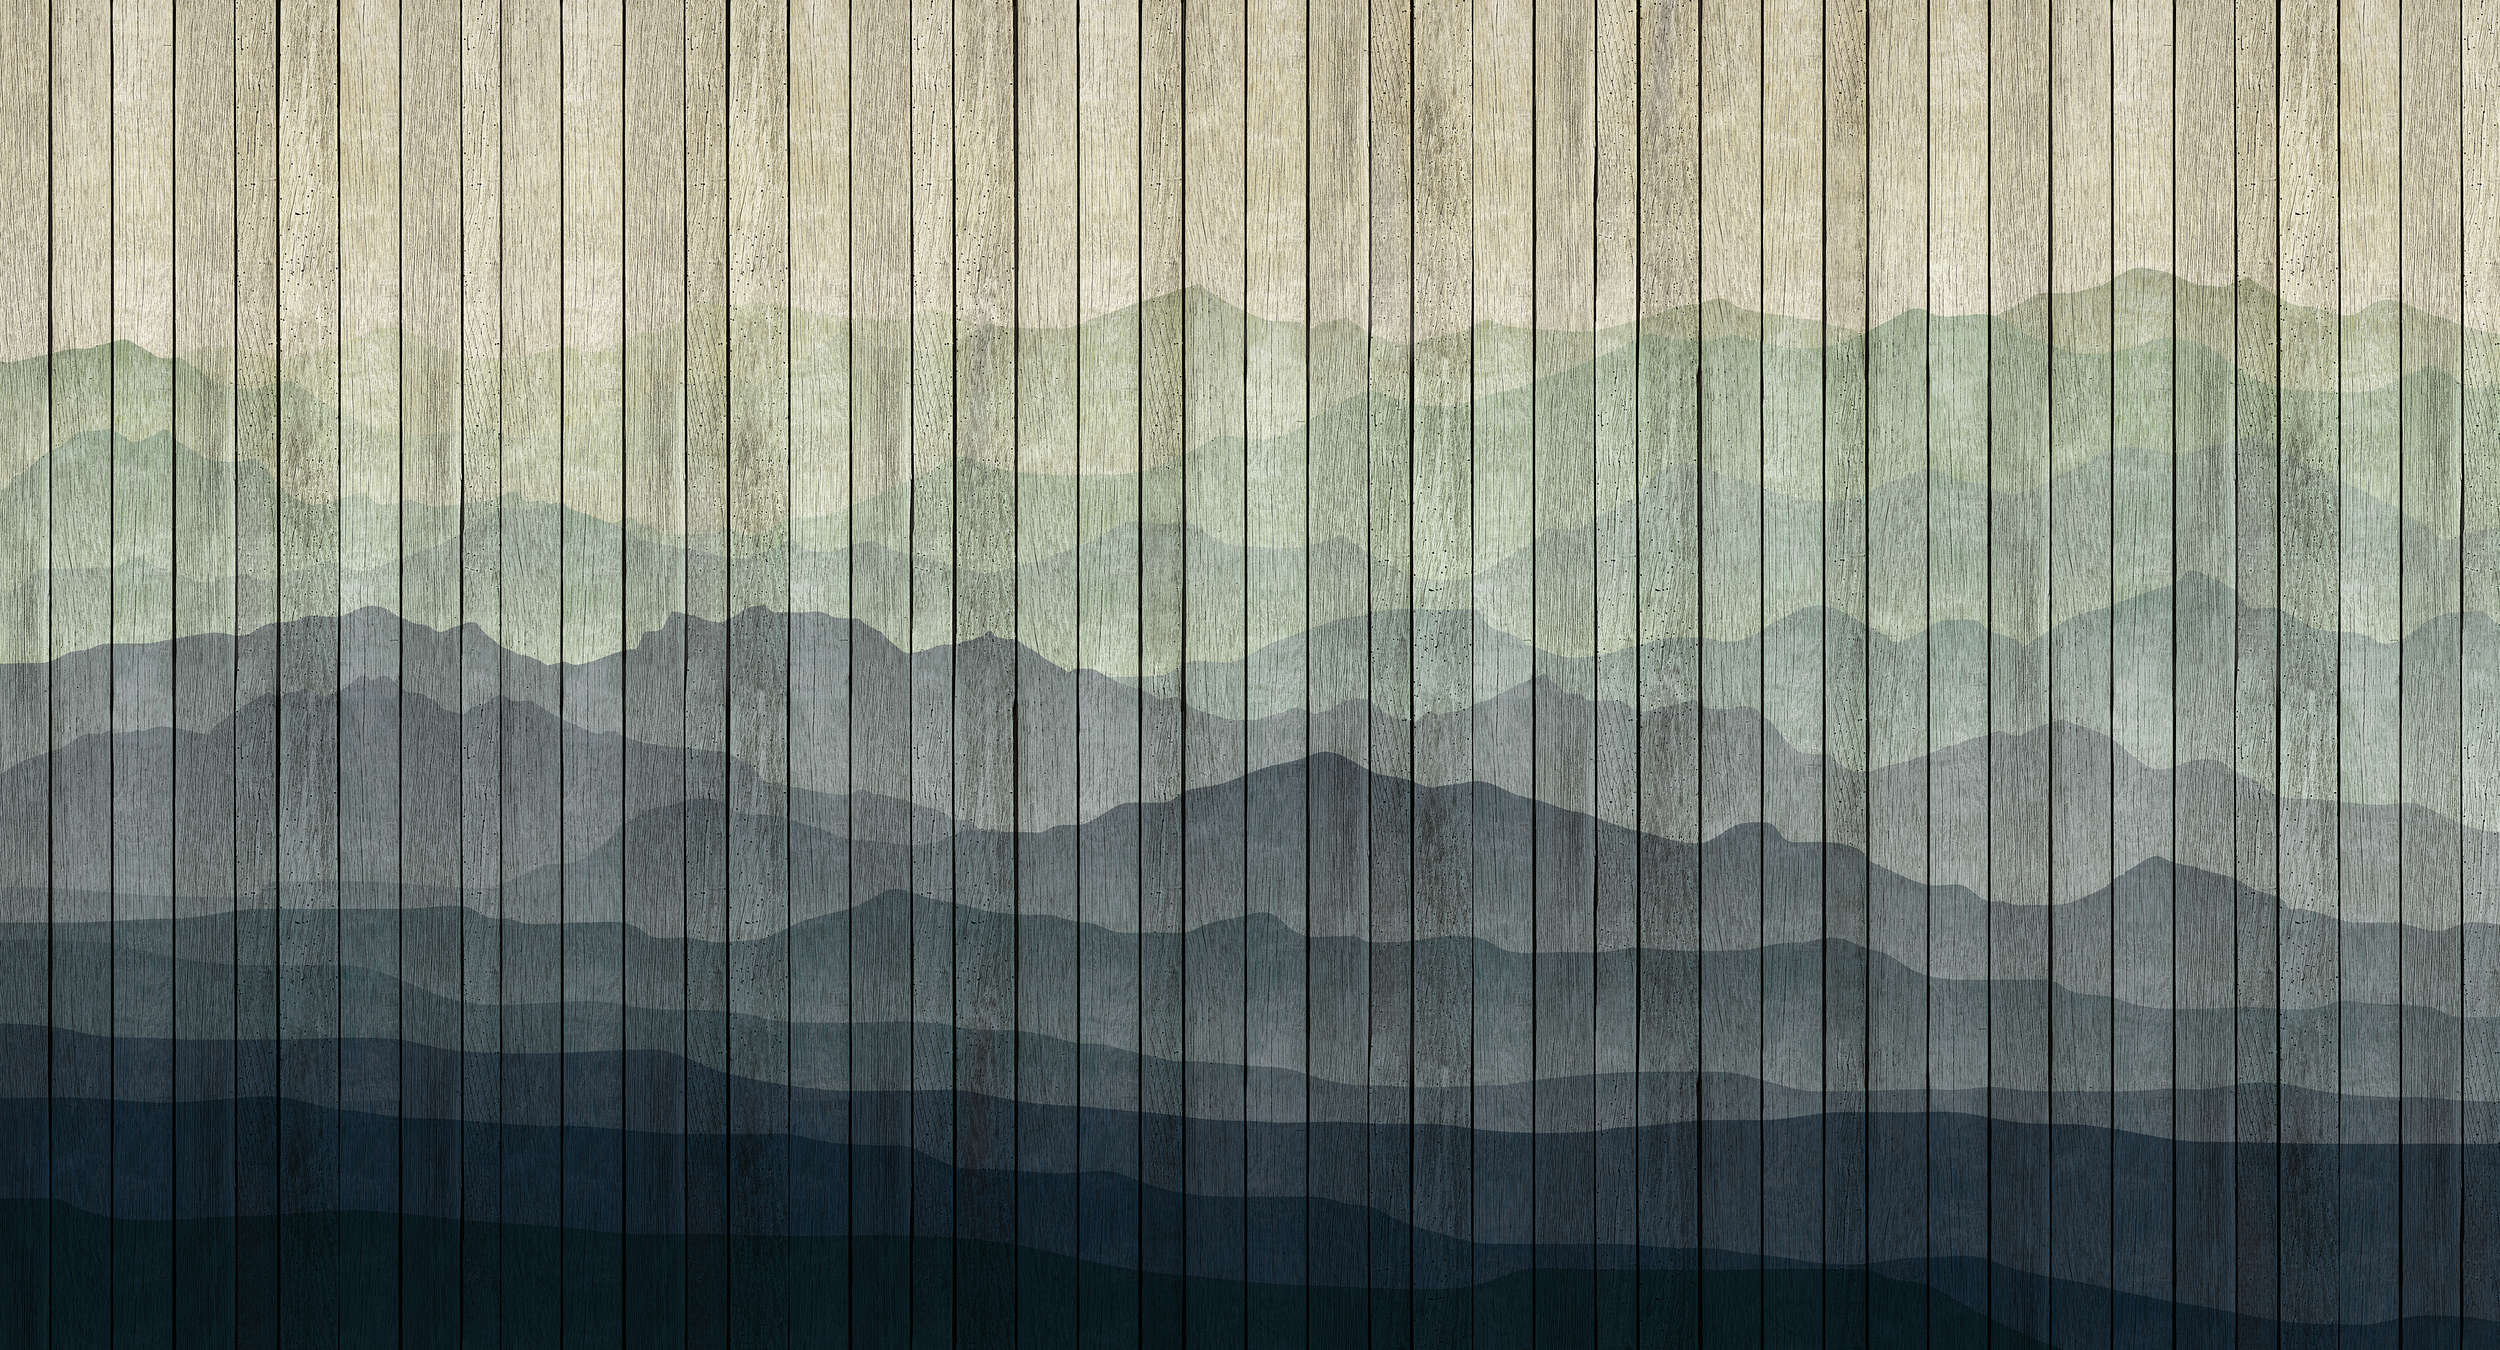             Mountains 1 - Modern Wallpaper Mountain Landscape & Board Optics - Beige, Blue | Premium Smooth Nonwoven
        